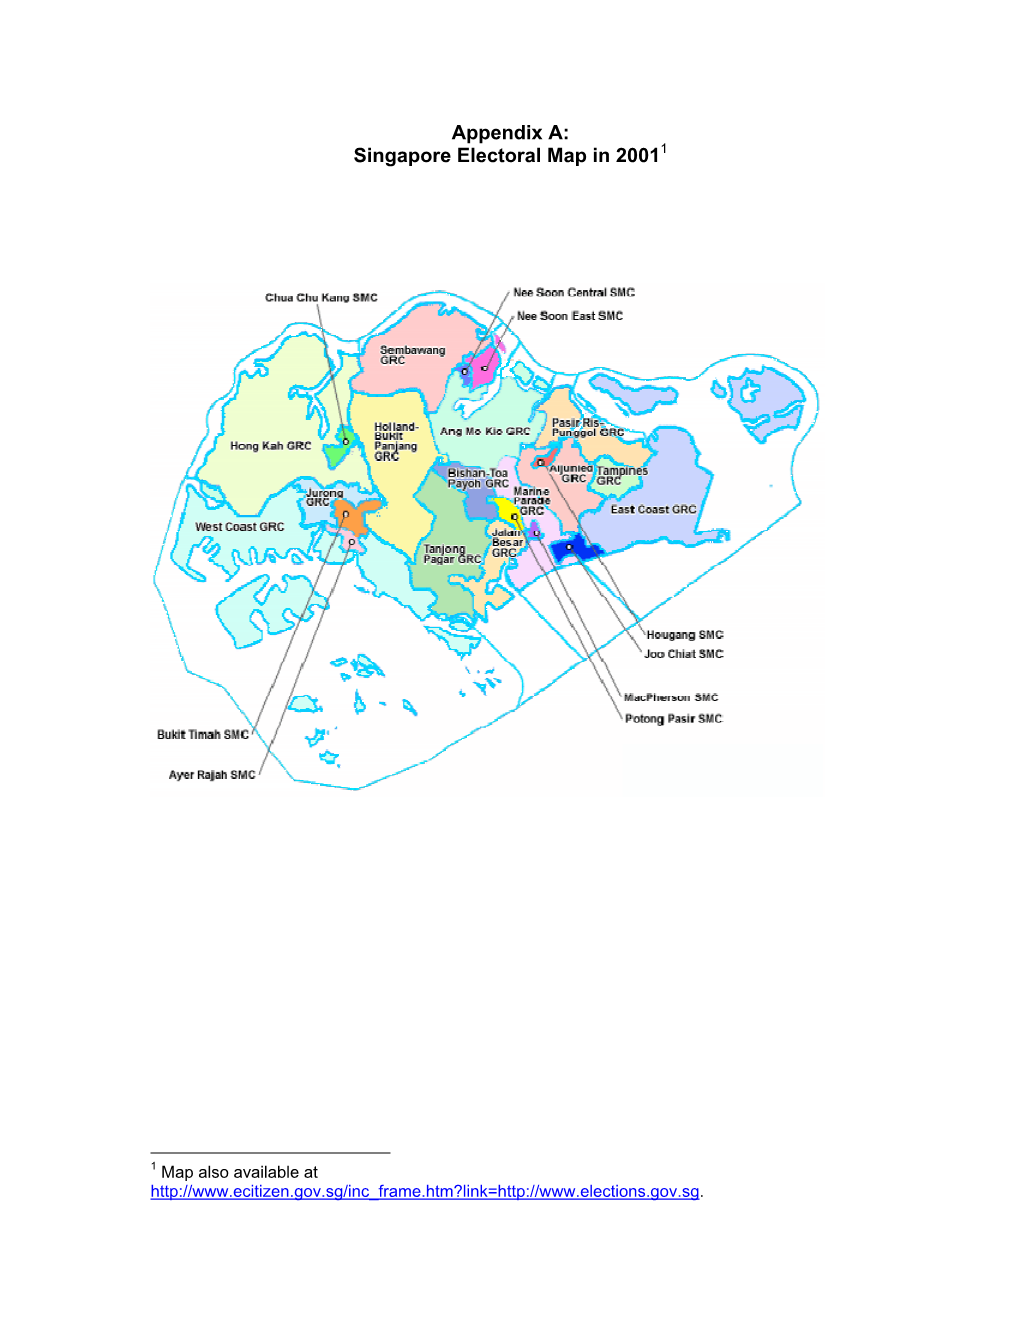 Appendix A: Singapore Electoral Map in 20011